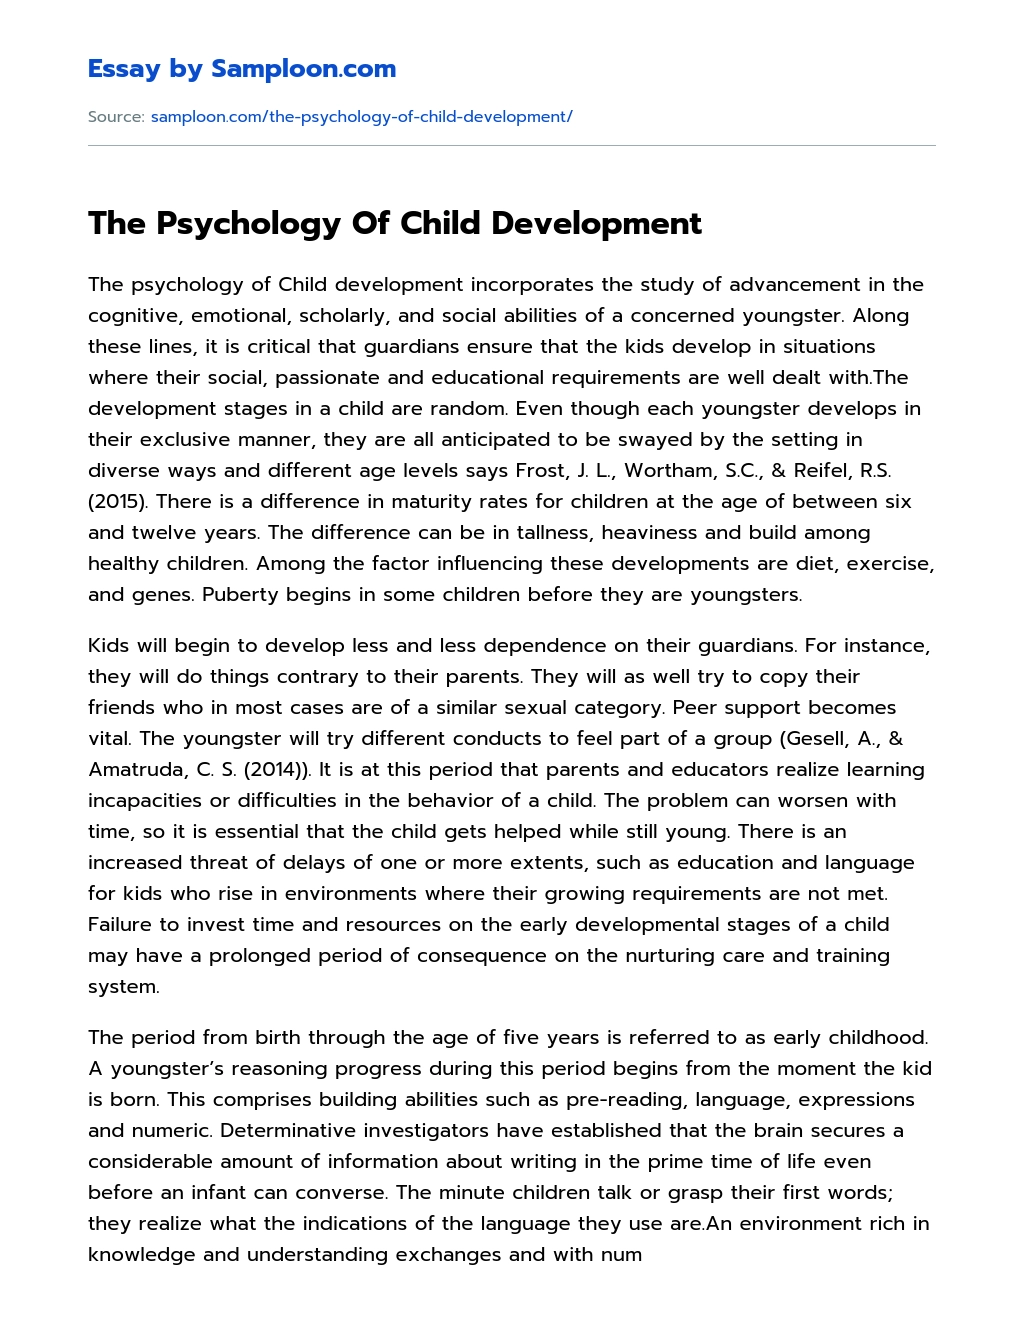 The Psychology Of Child Development essay